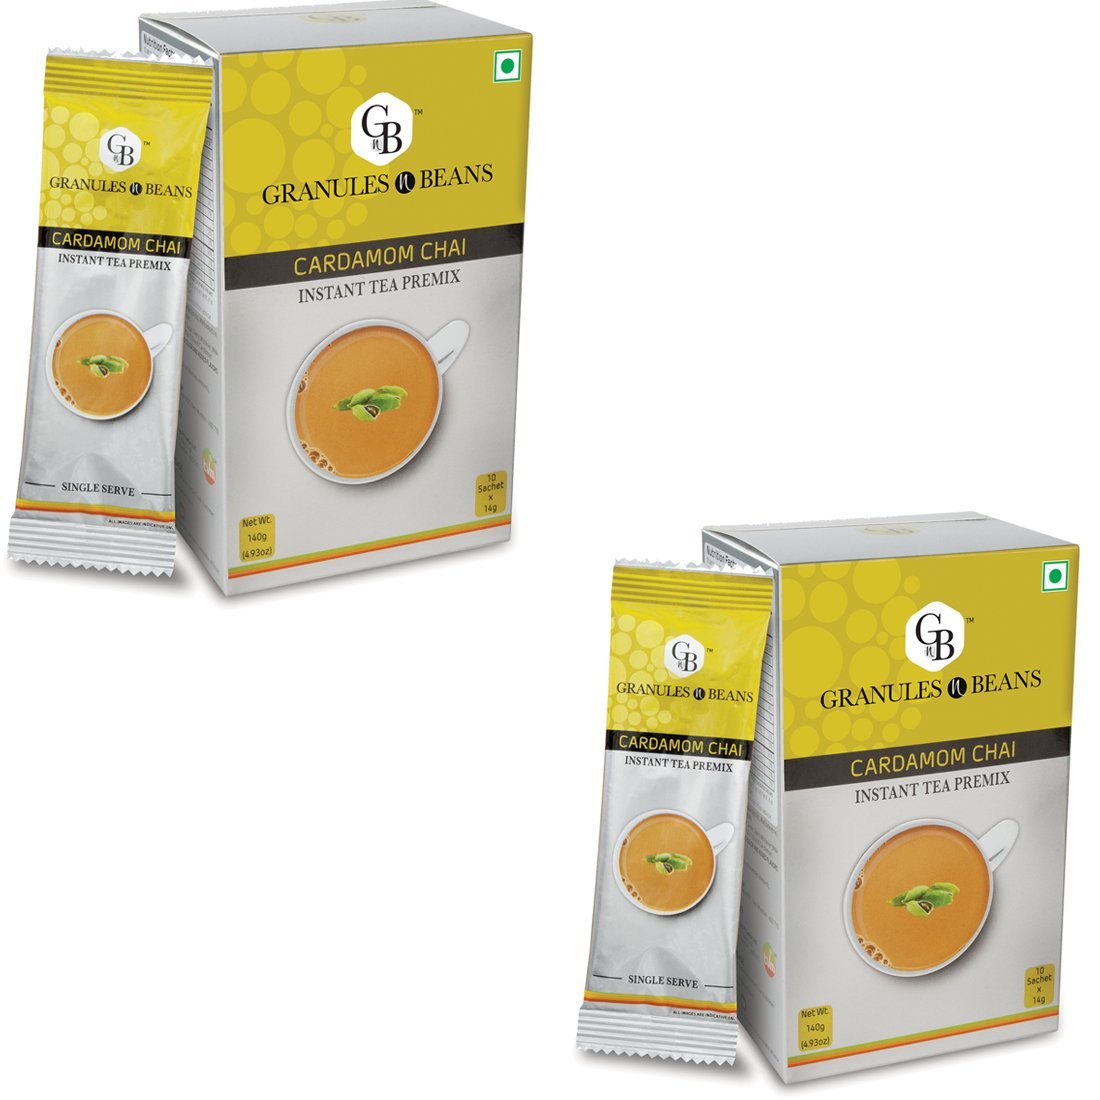 Granules n Beans Cardomom Chai Instant Tea Premix - (10 Sachet x 14g = 140g) (Pack of 2)